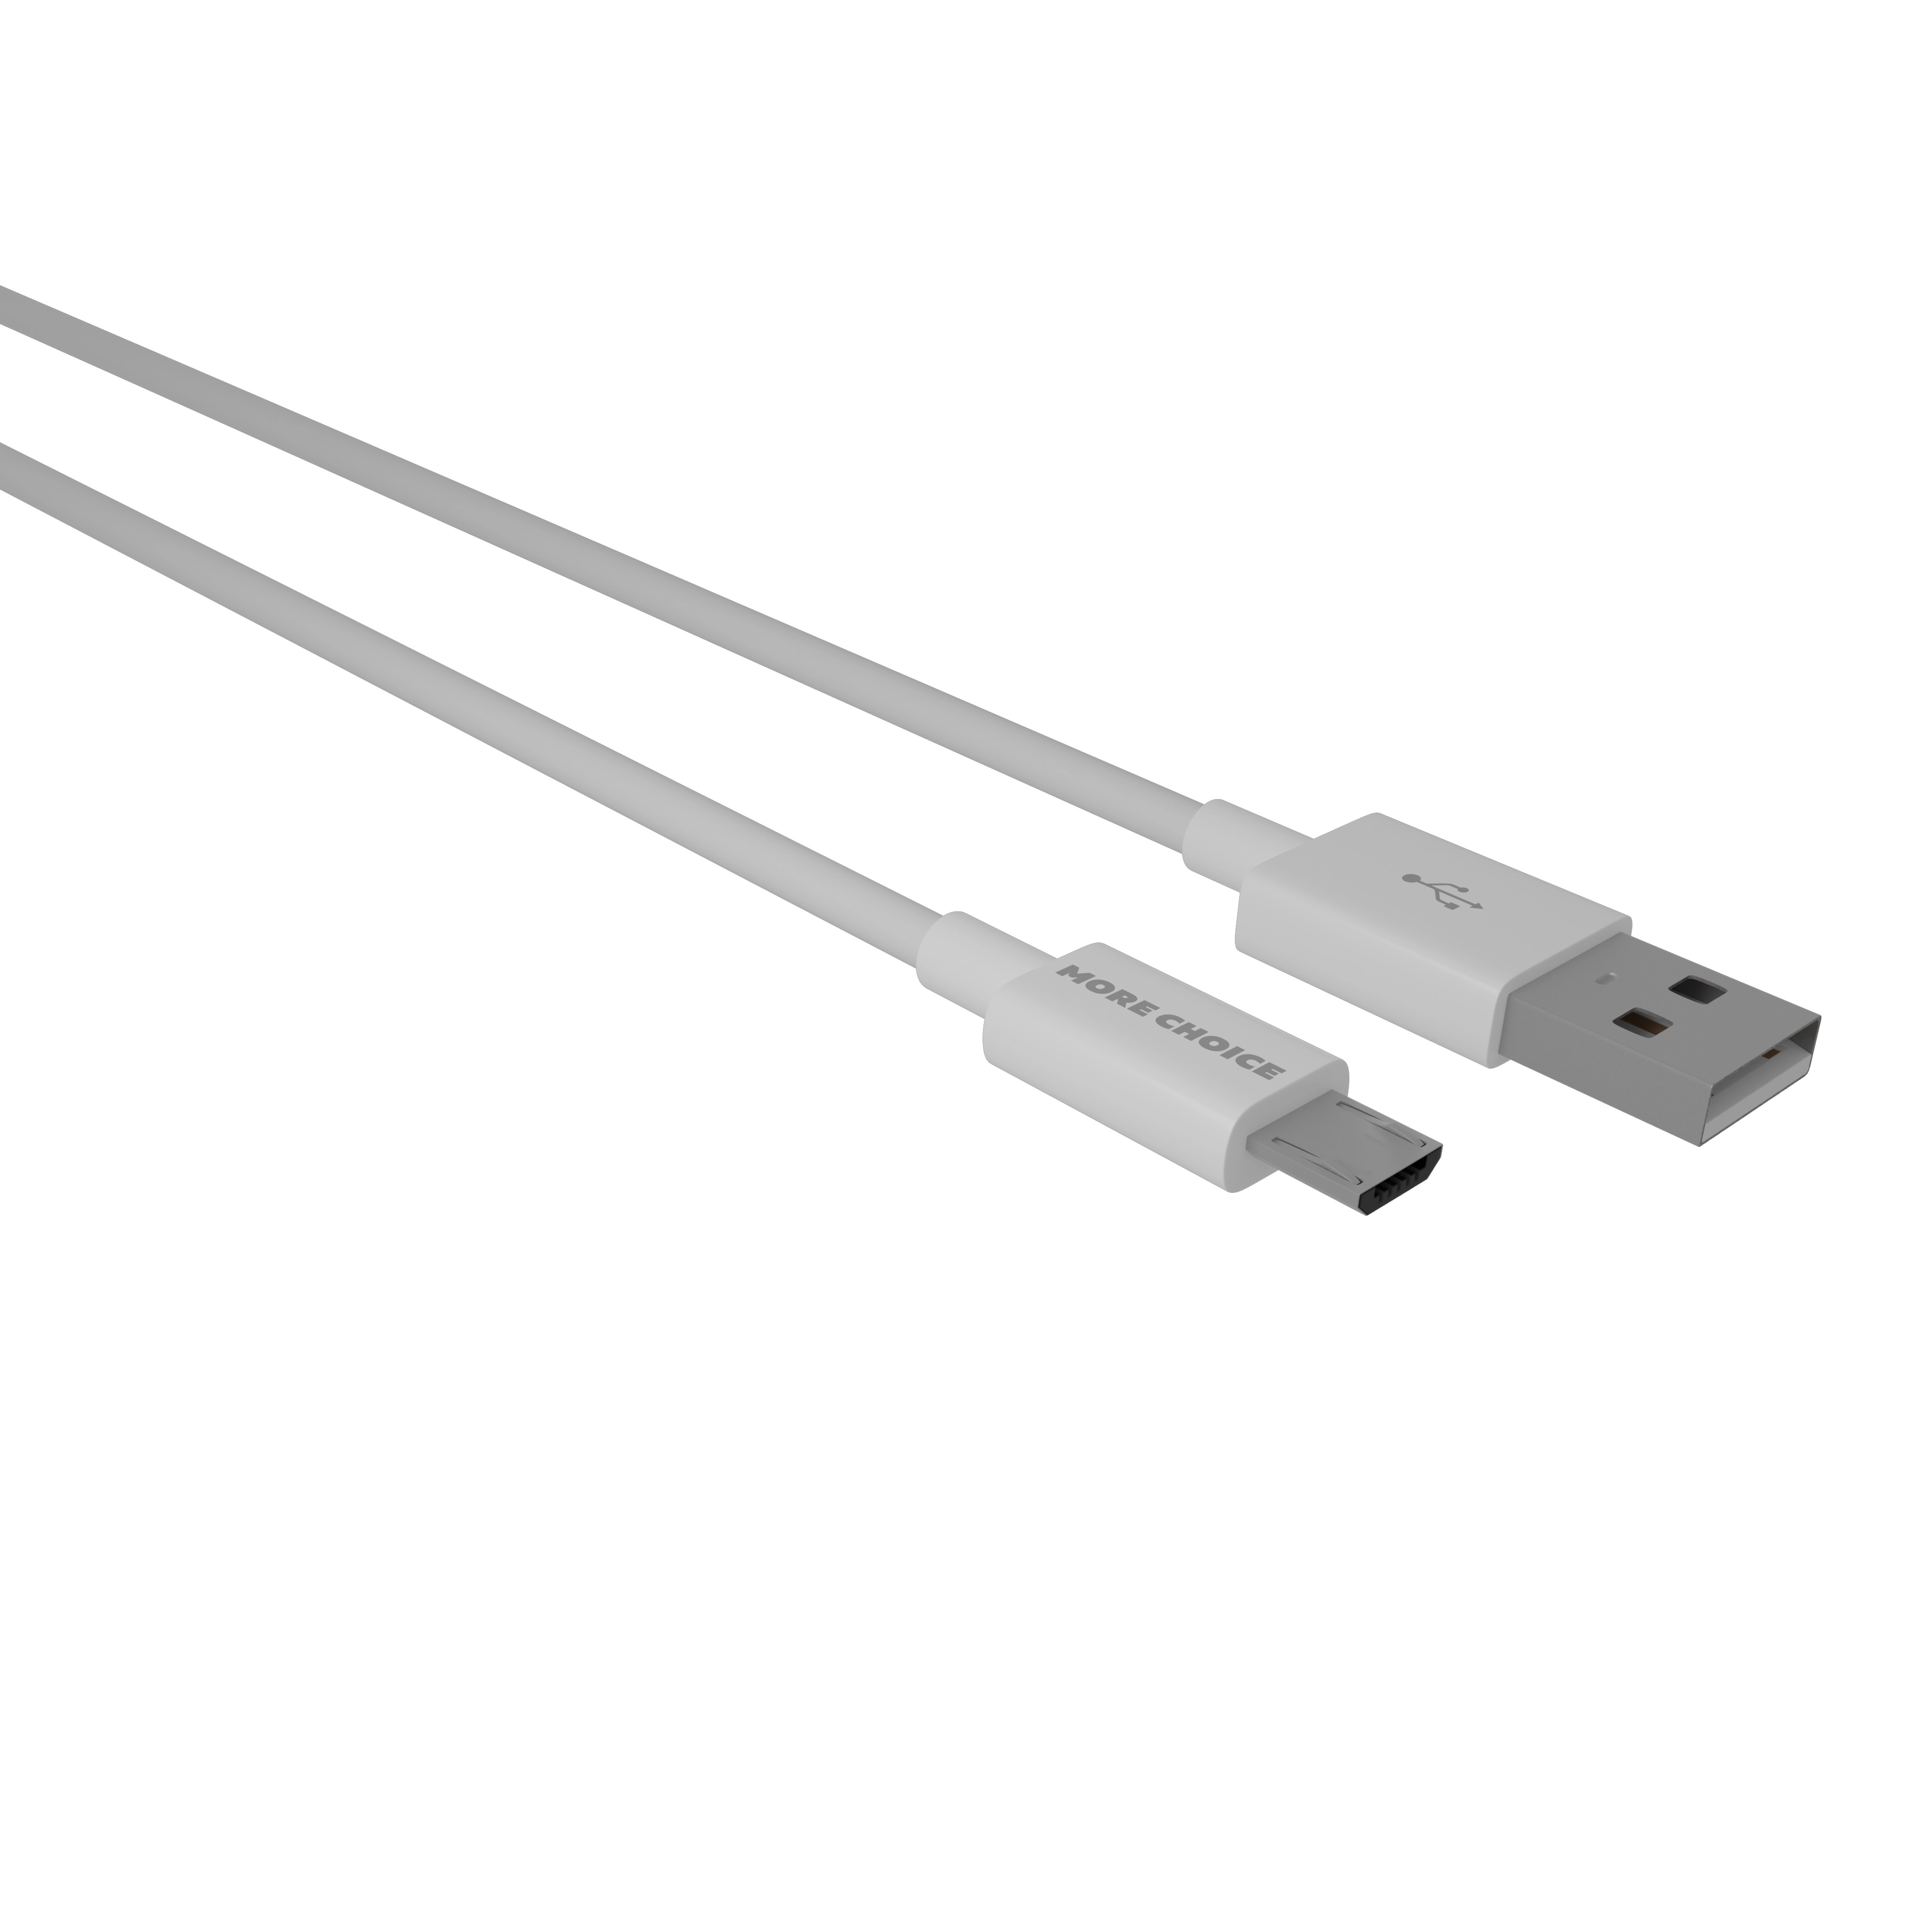 Дата-кабель More choice K42m Smart USB 3.0A для micro USB ТРЕ 1м White